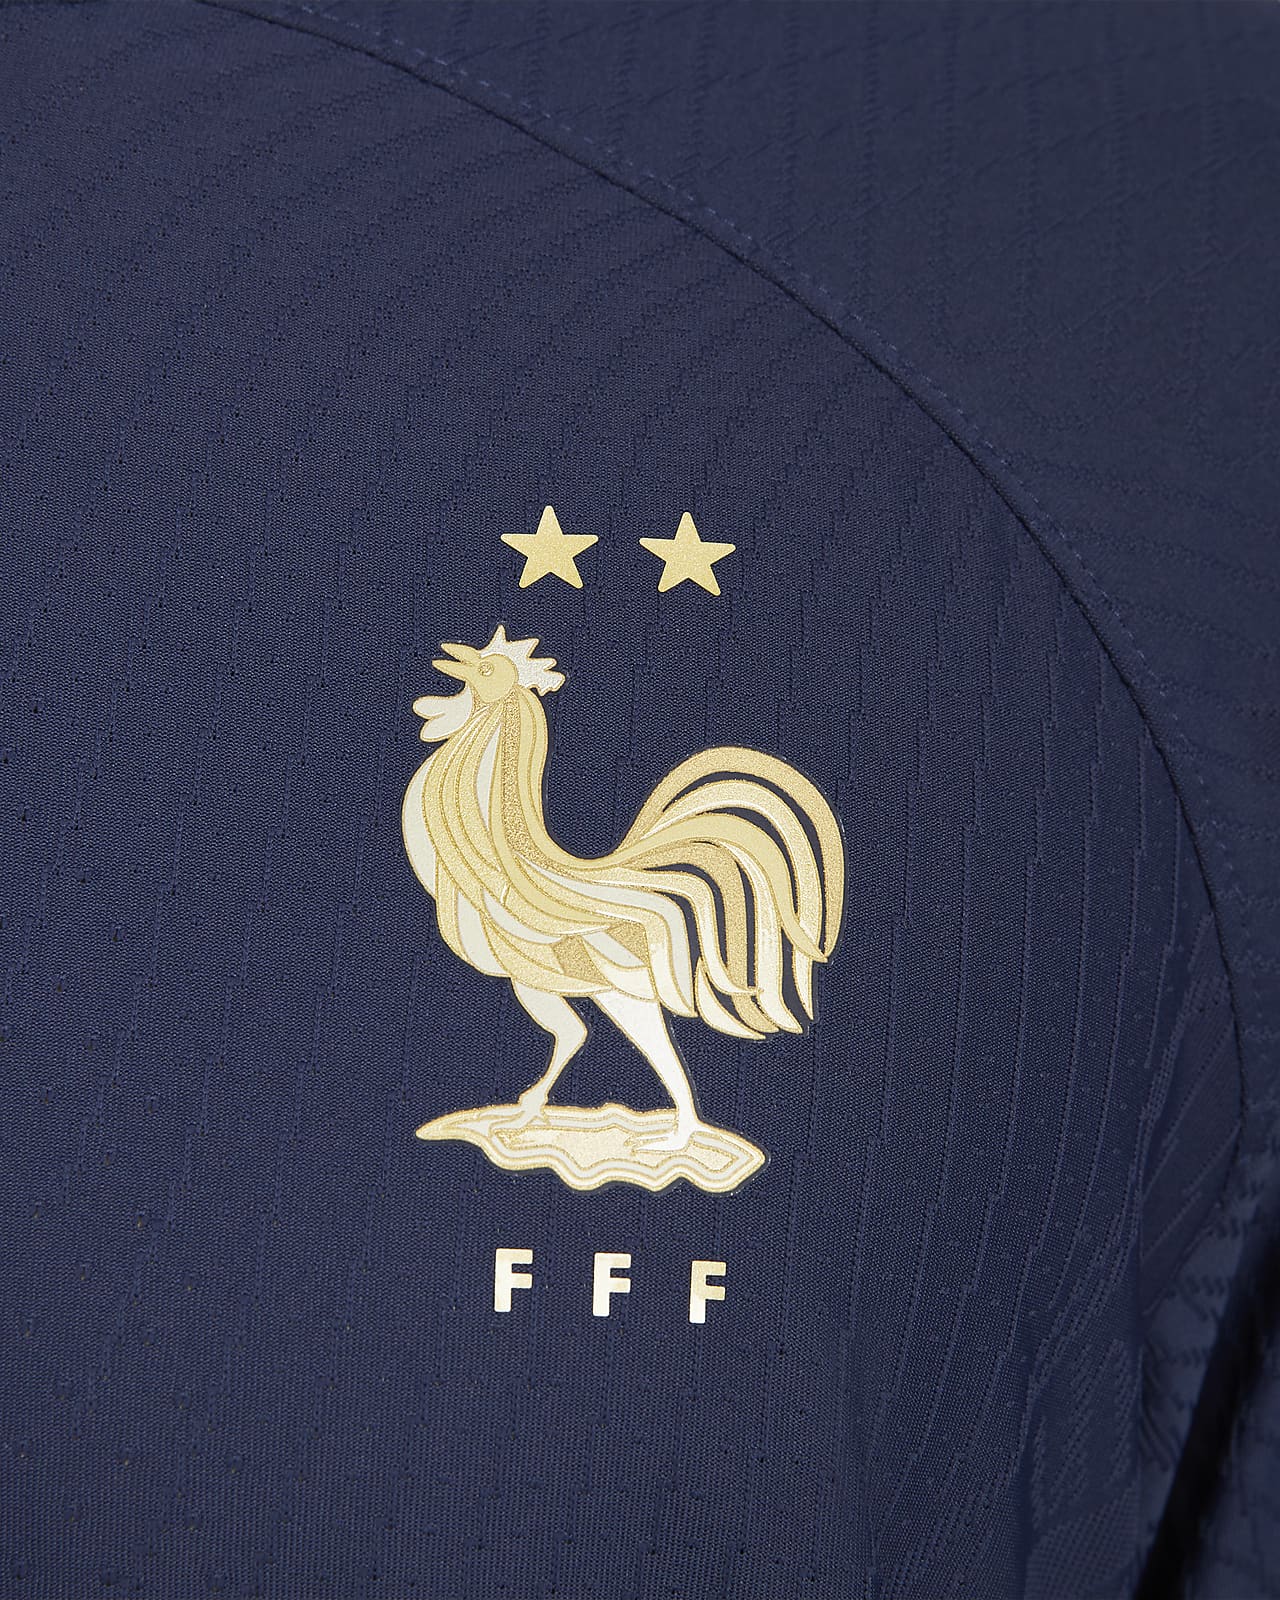 France 2022-23 Nike Home Kit - Football Shirt Culture - Latest Football ...